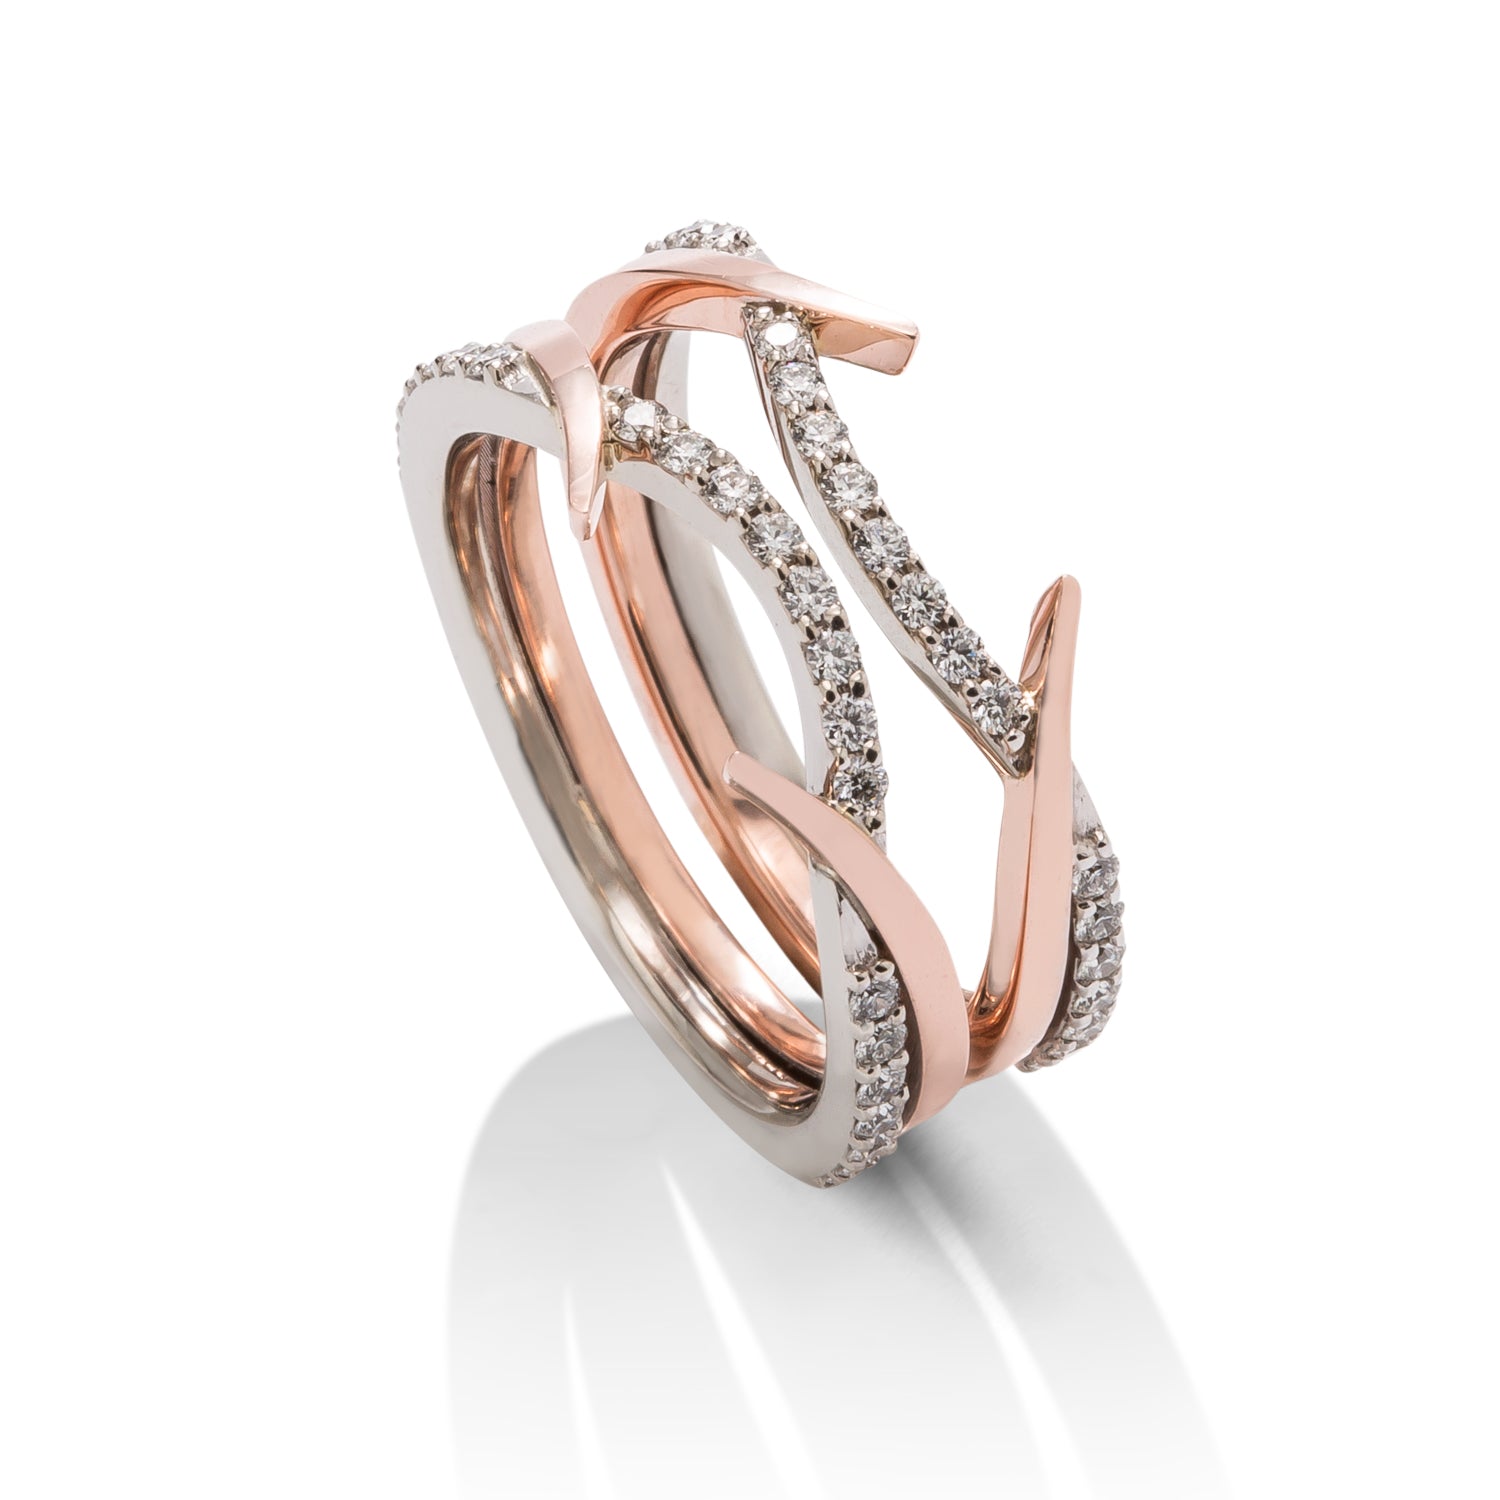 14k Rose and White Gold Diamond Ring Pair - Charles Koll Jewellers